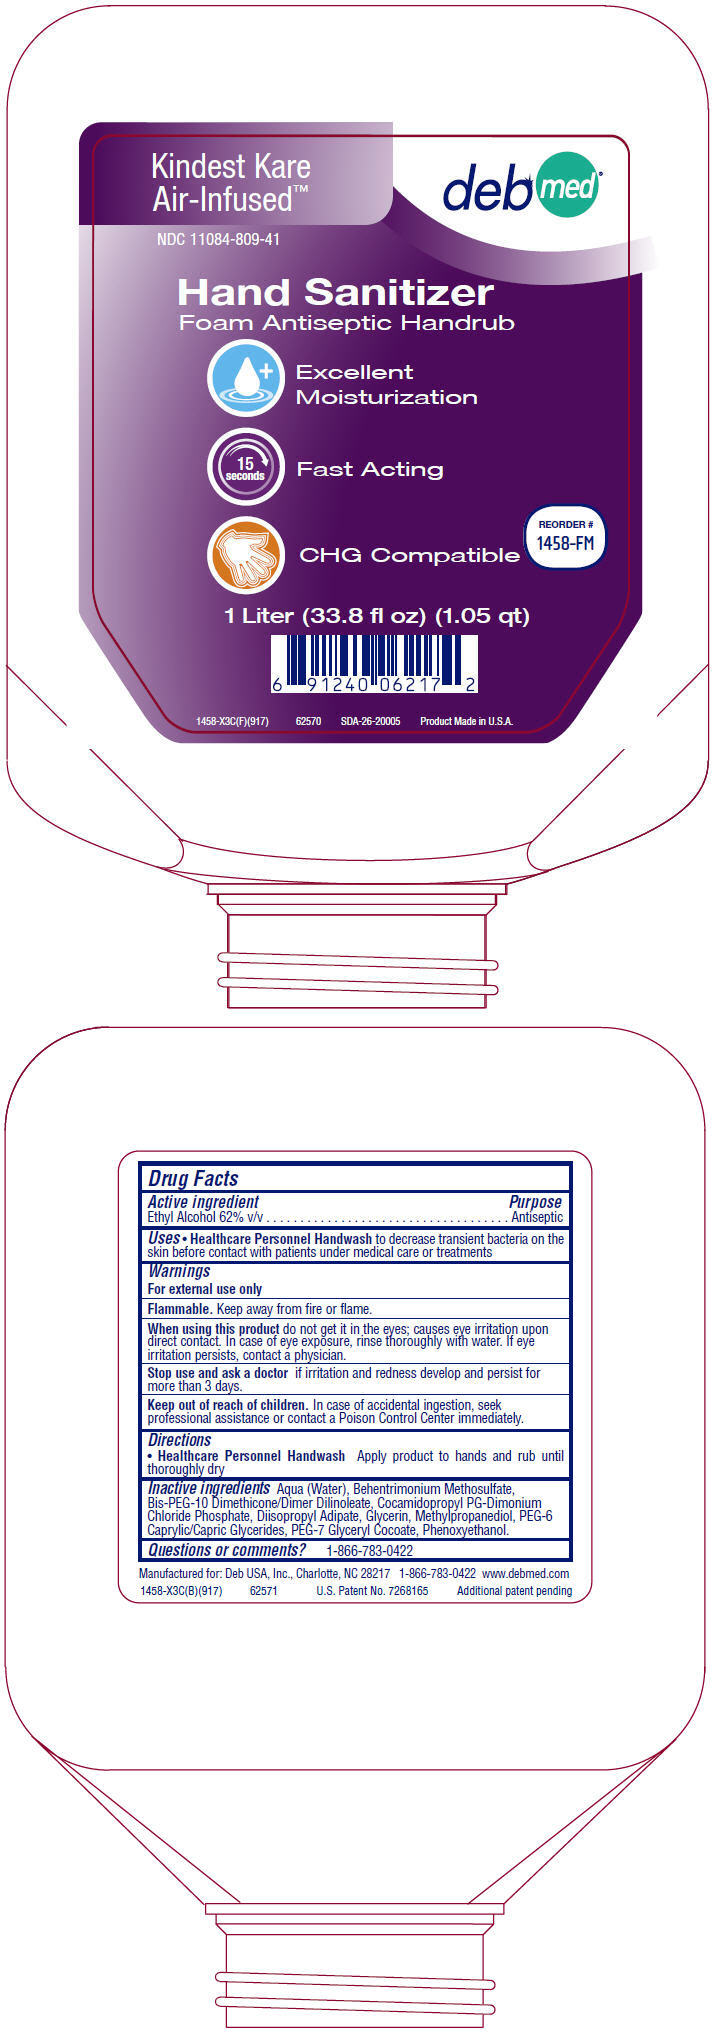 Principal Display Panel - 1 Liter Bottle Label